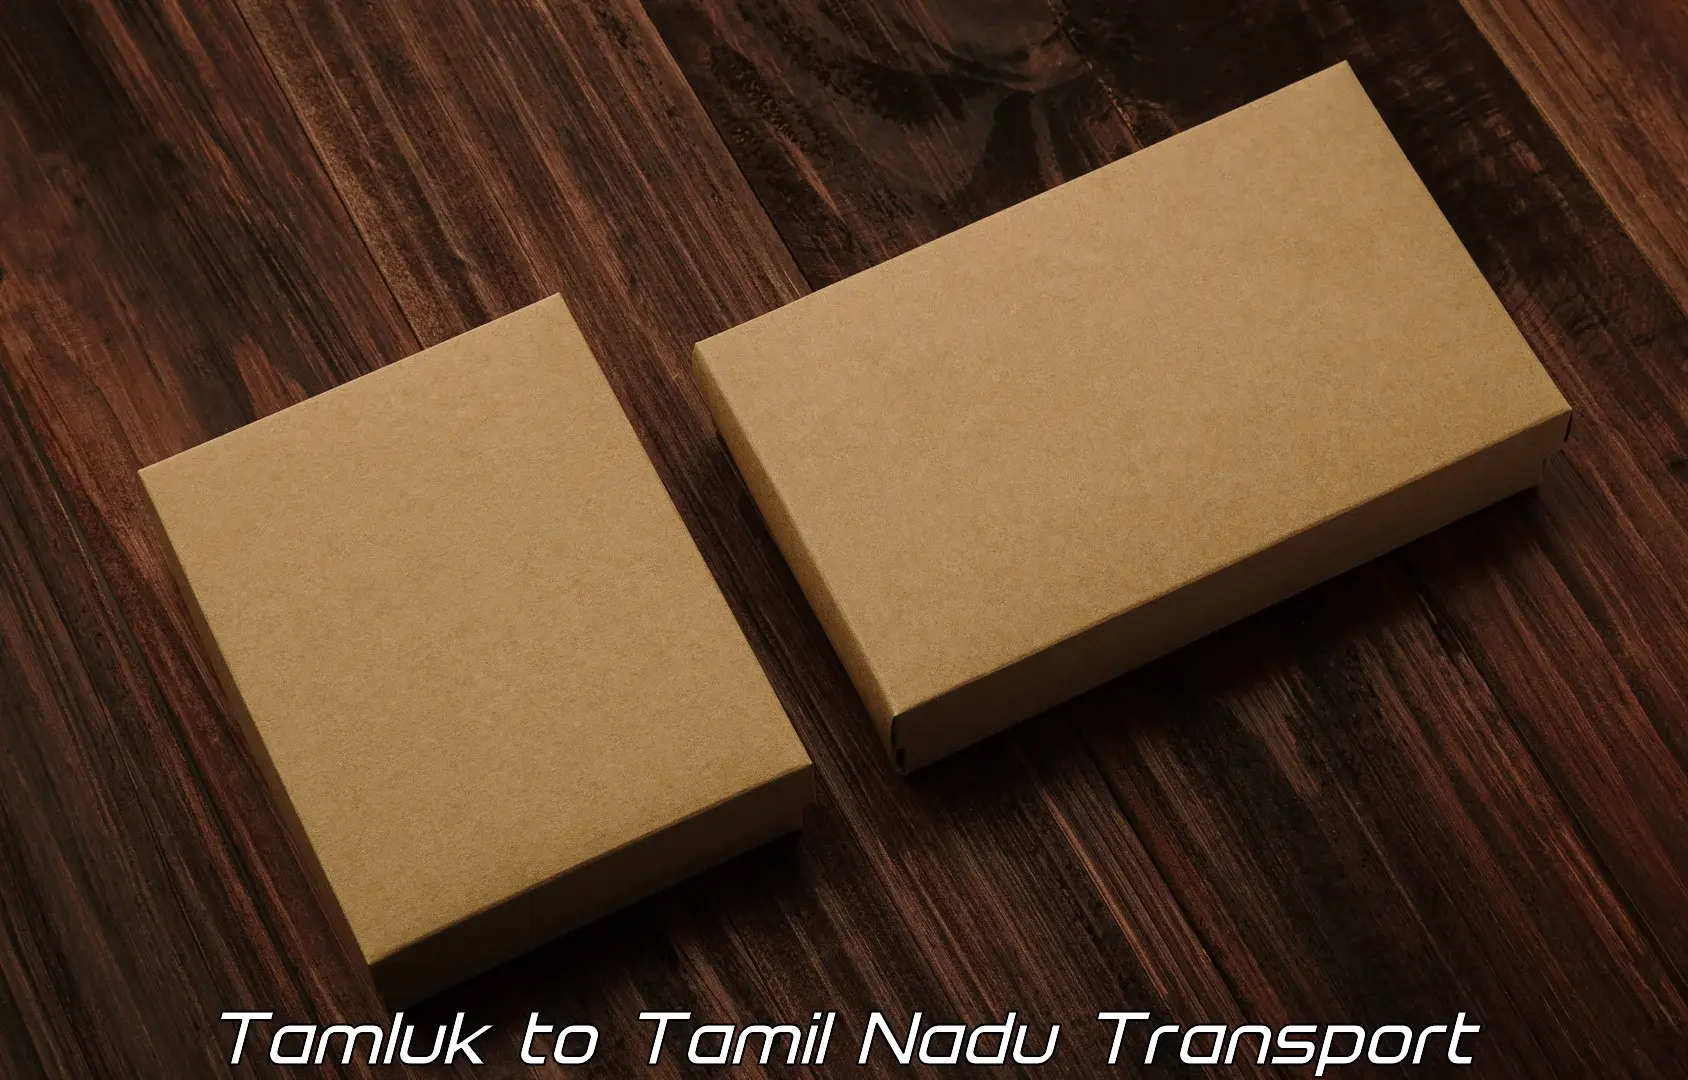 Shipping partner Tamluk to The Gandhigram Rural Institute